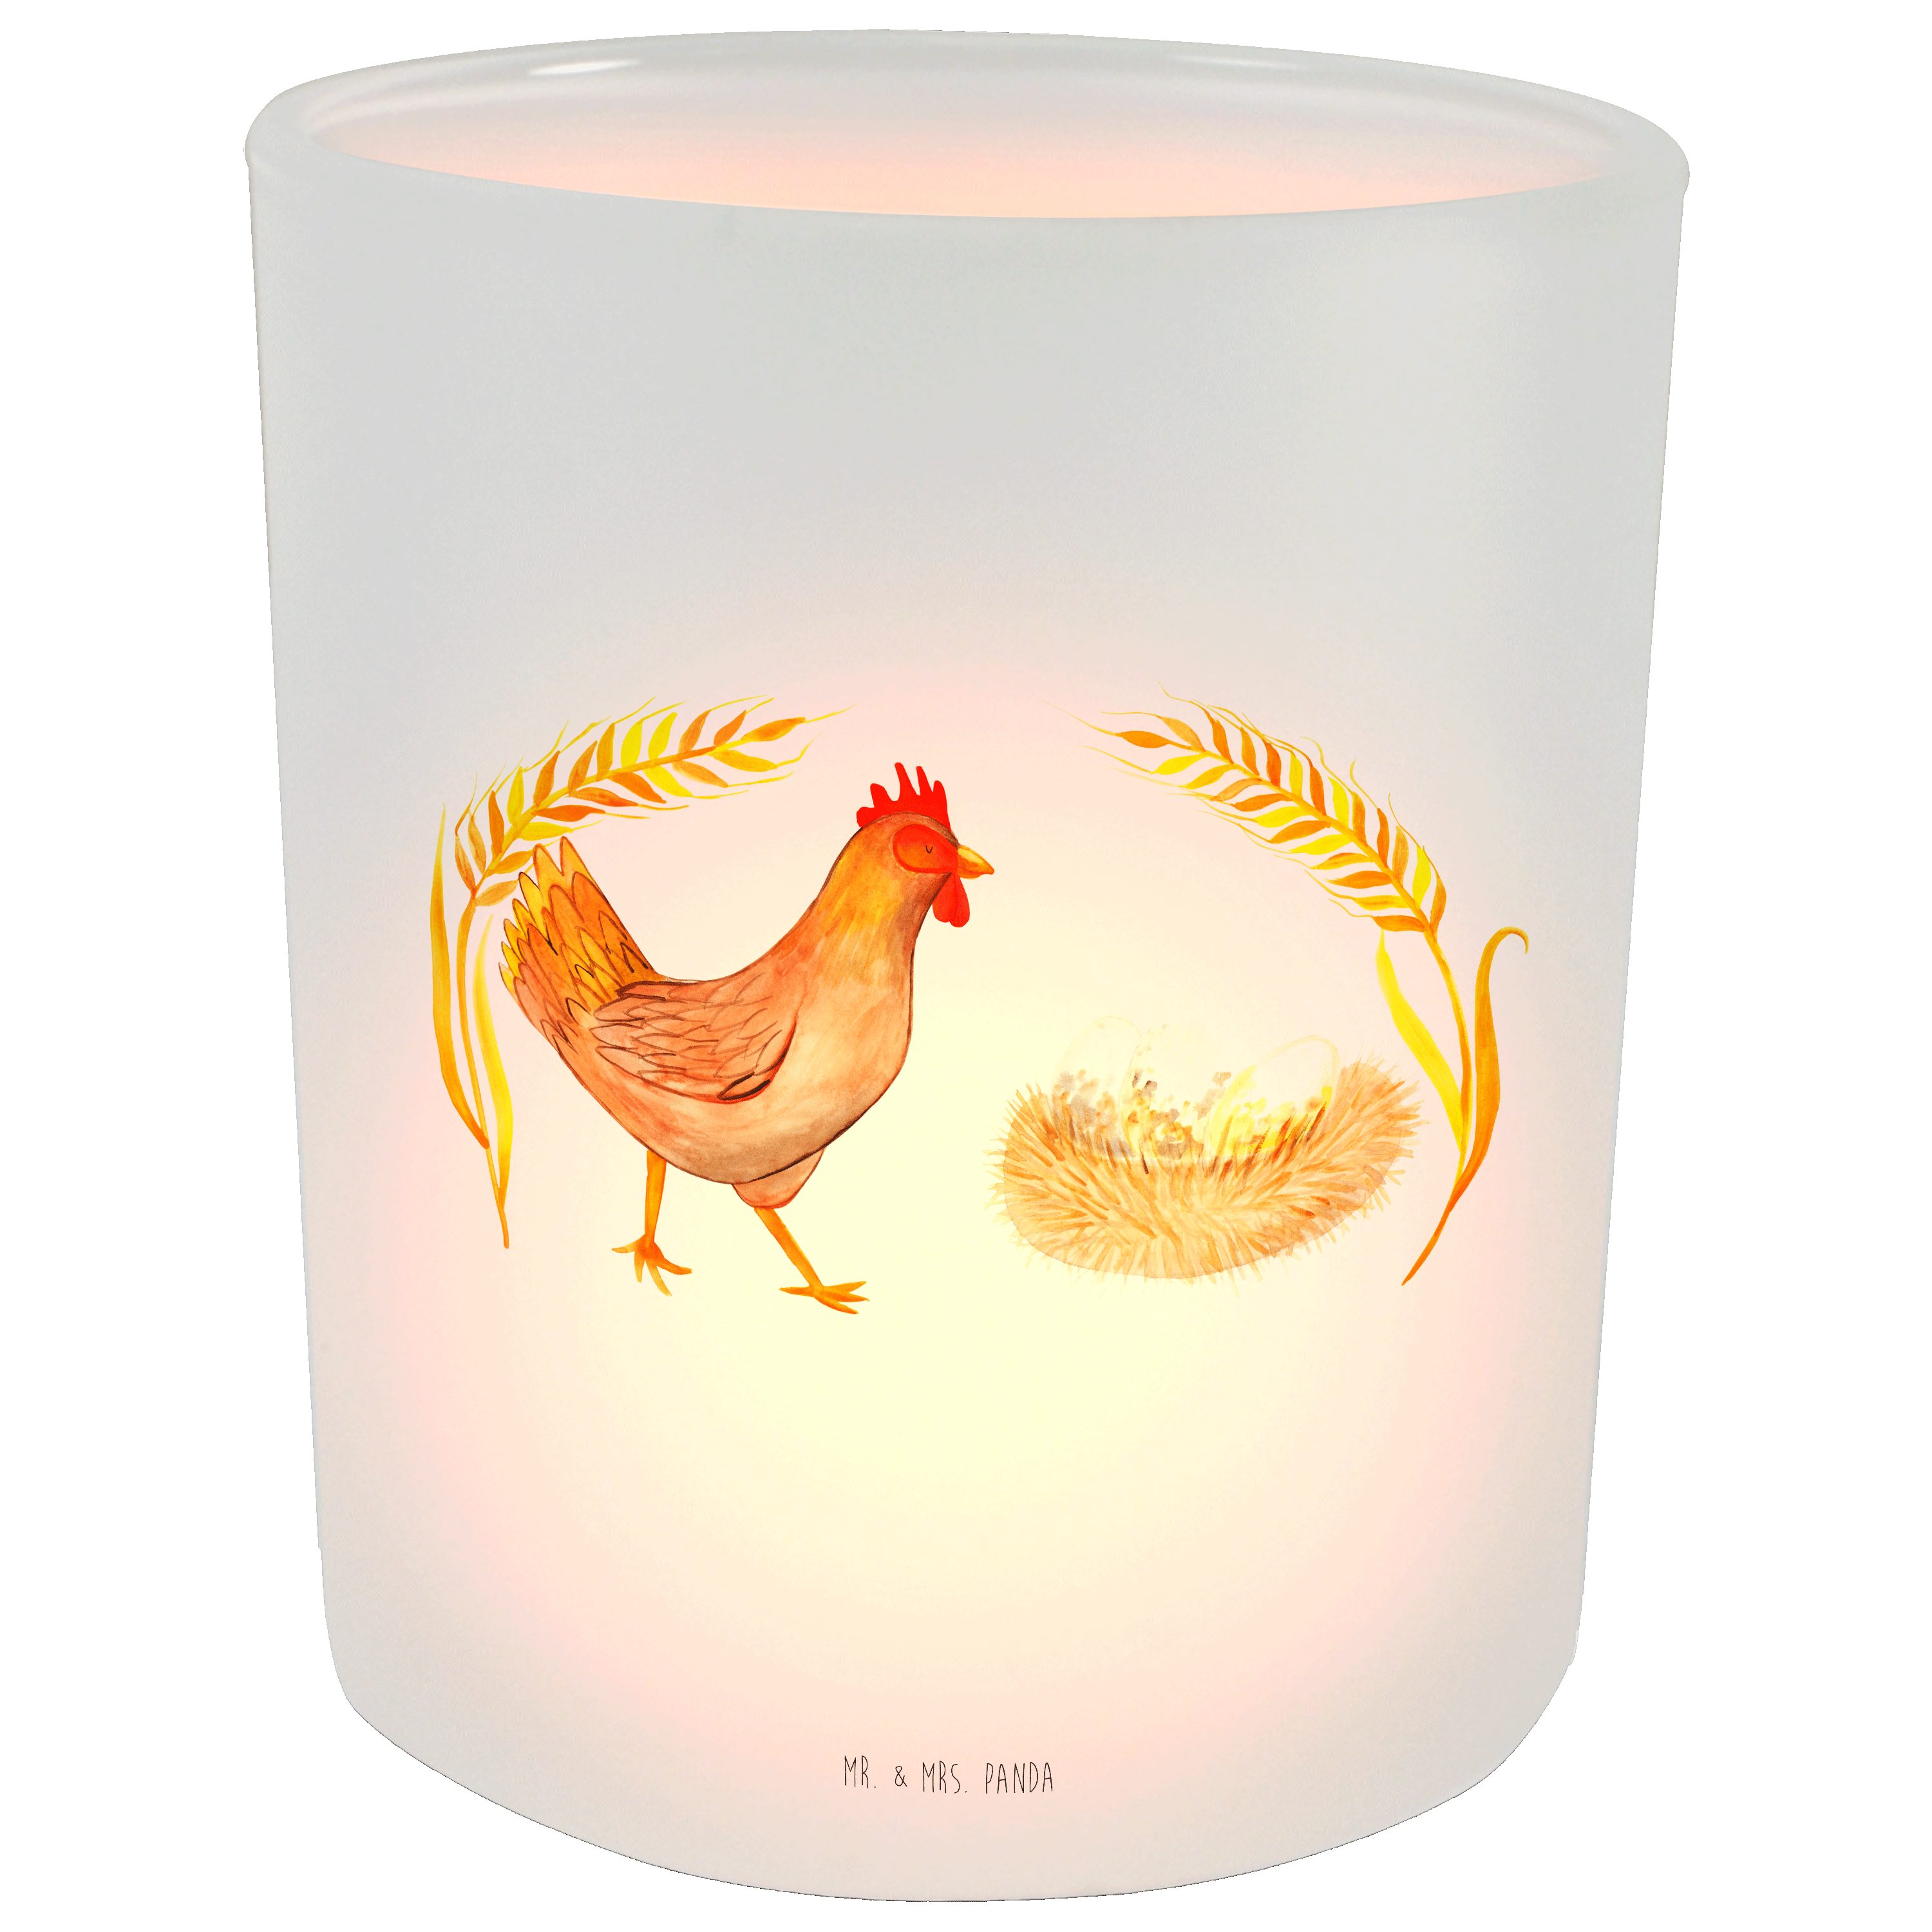 Mr. & Mrs. Panda Windlicht Huhn stolz - Transparent - Geschenk, Landwirtin, Kerzenlicht, Magie, (1 St)